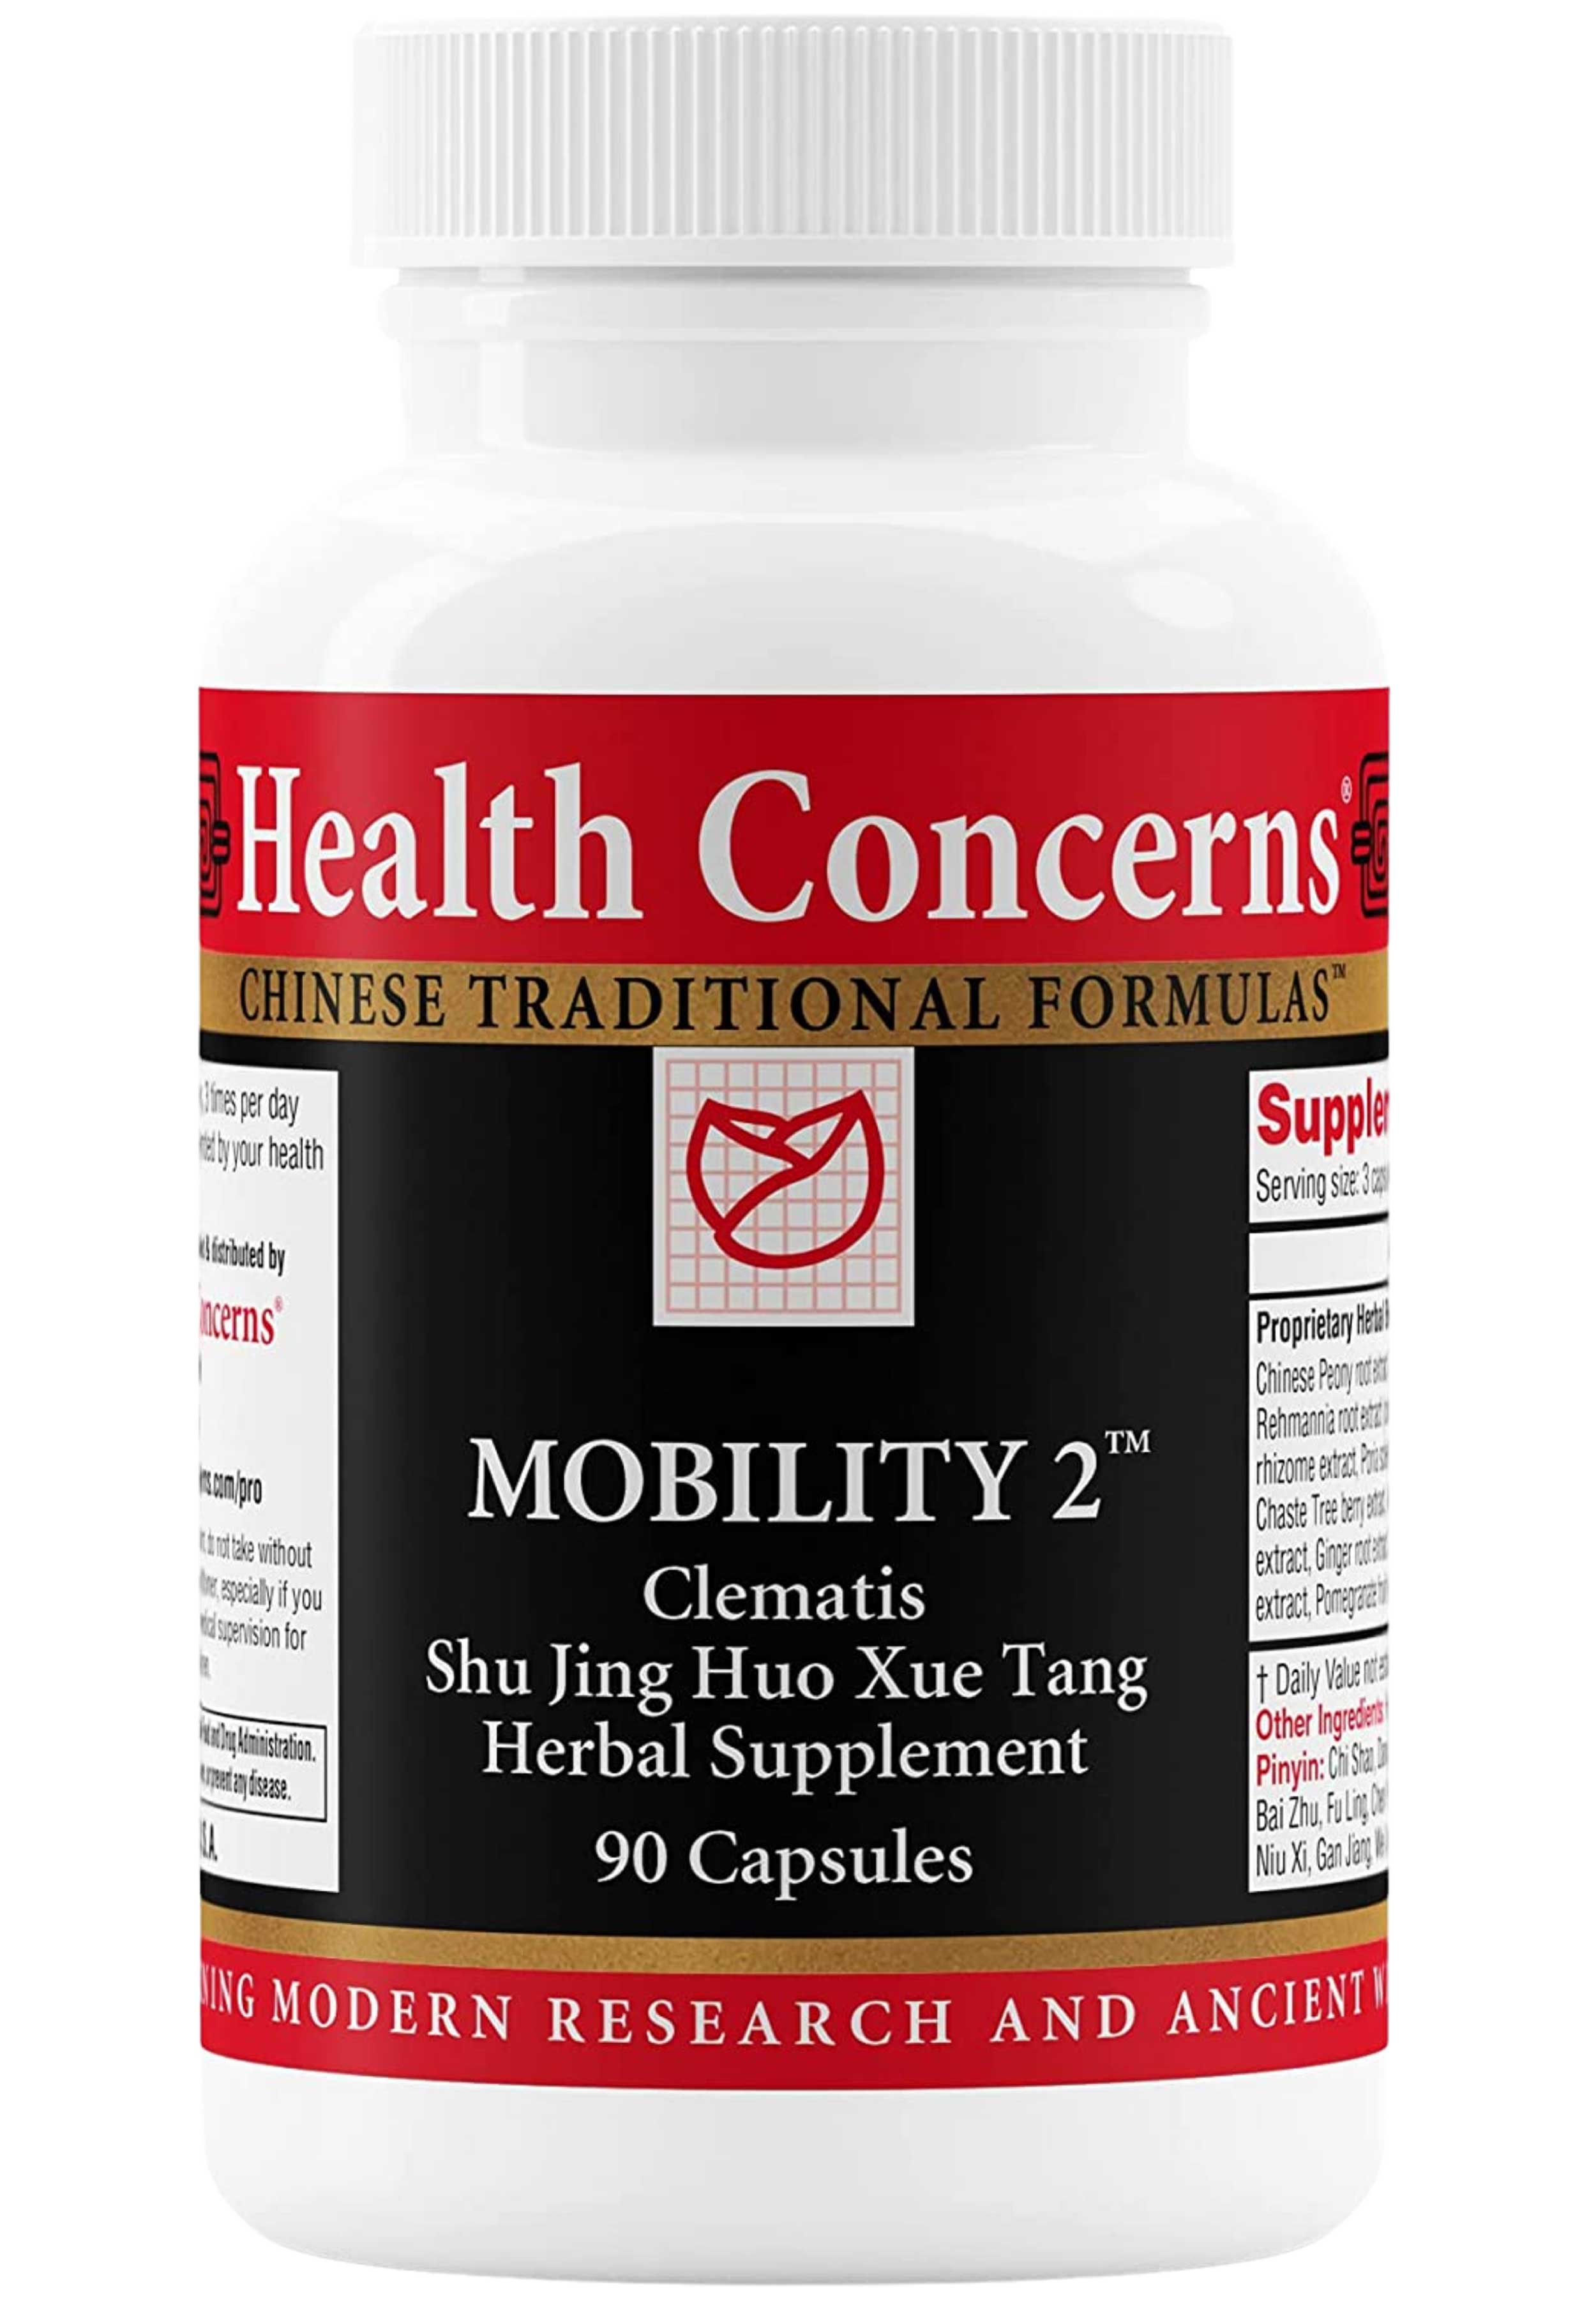 Health Concerns Mobility 2